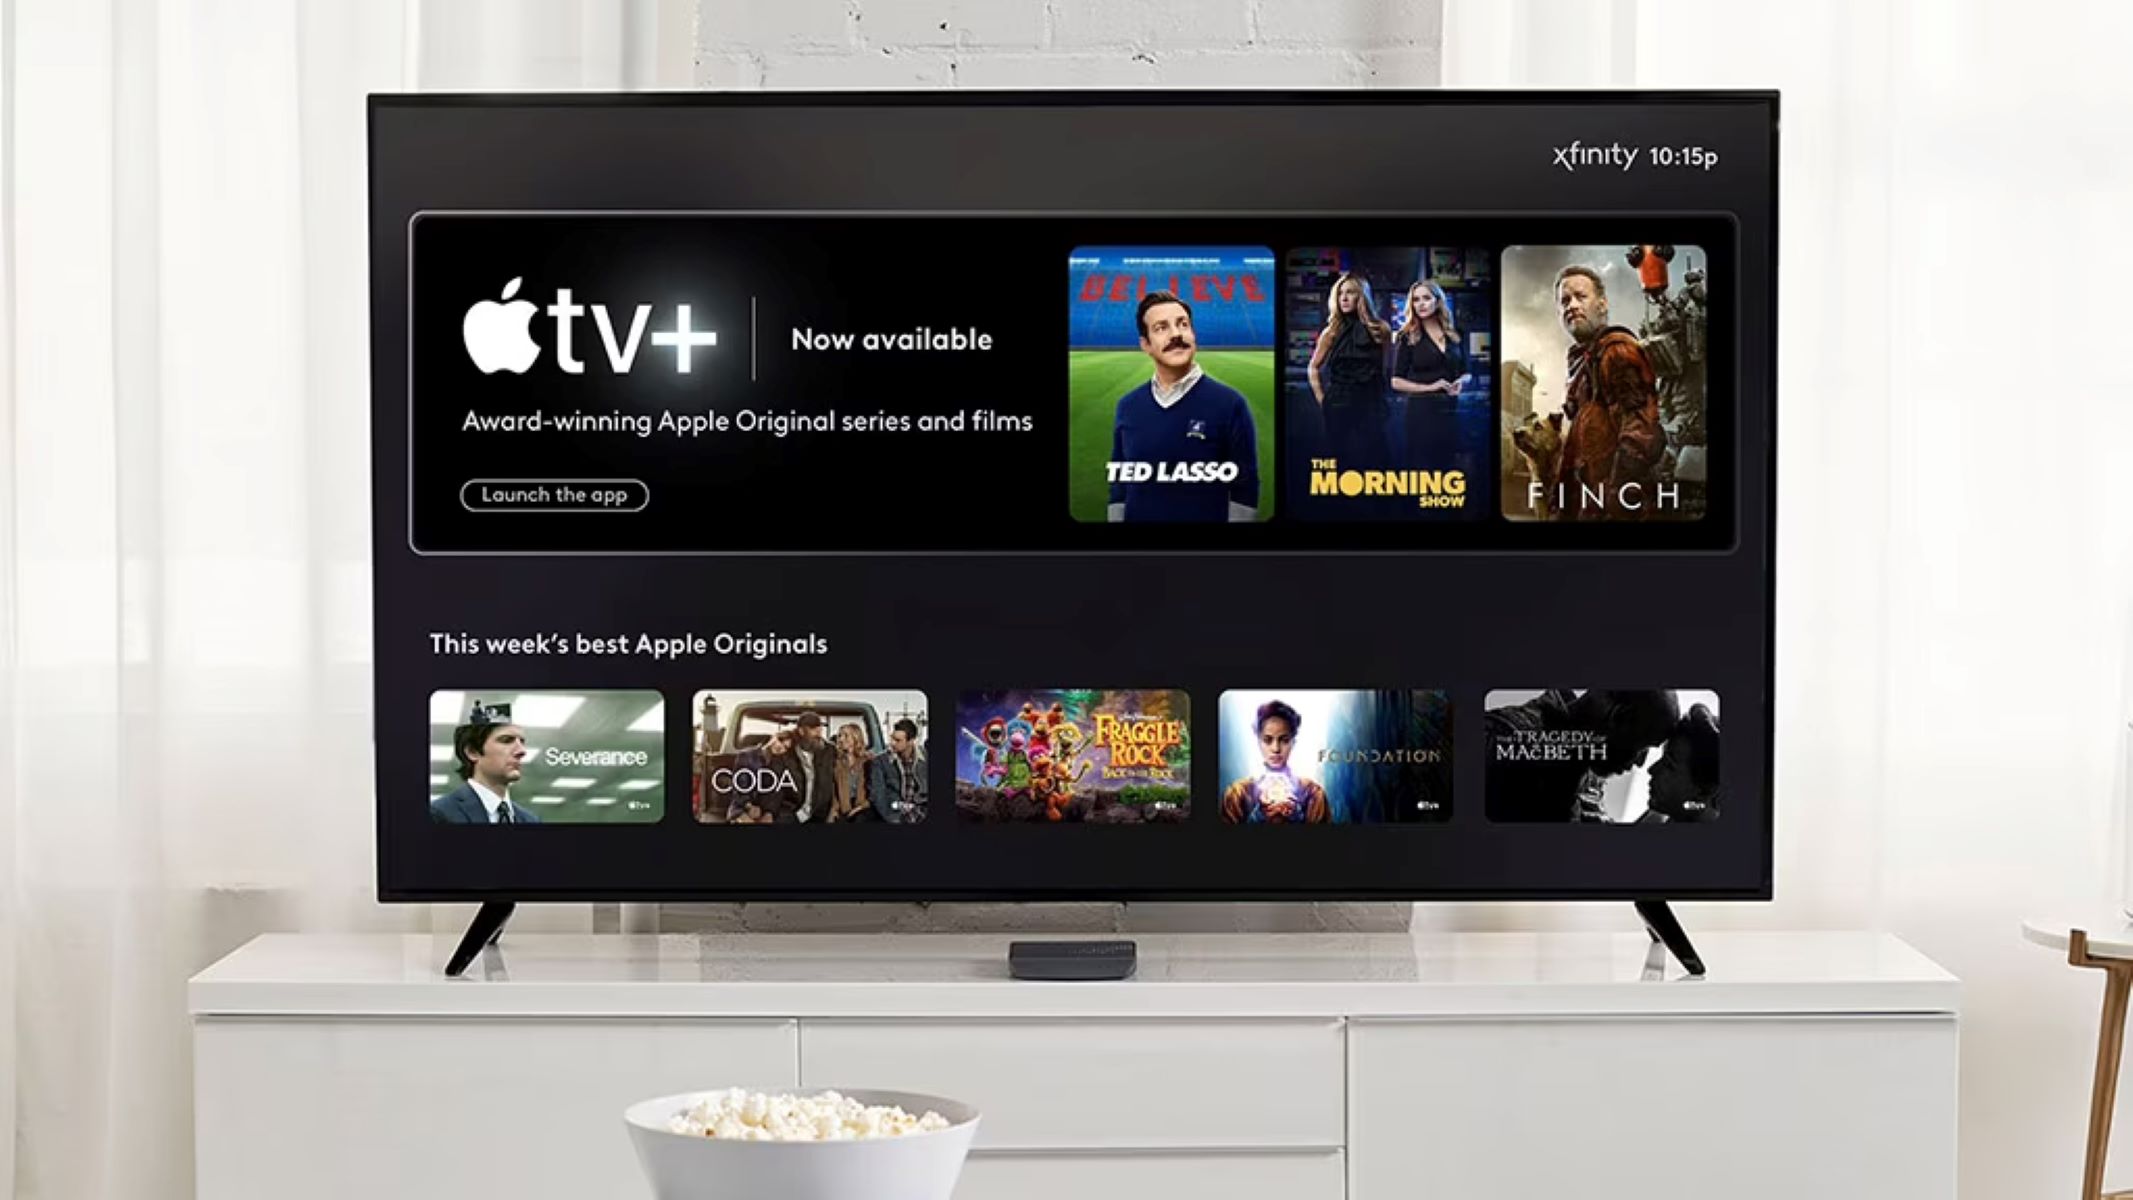 how-to-watch-apple-tv-on-xfinity